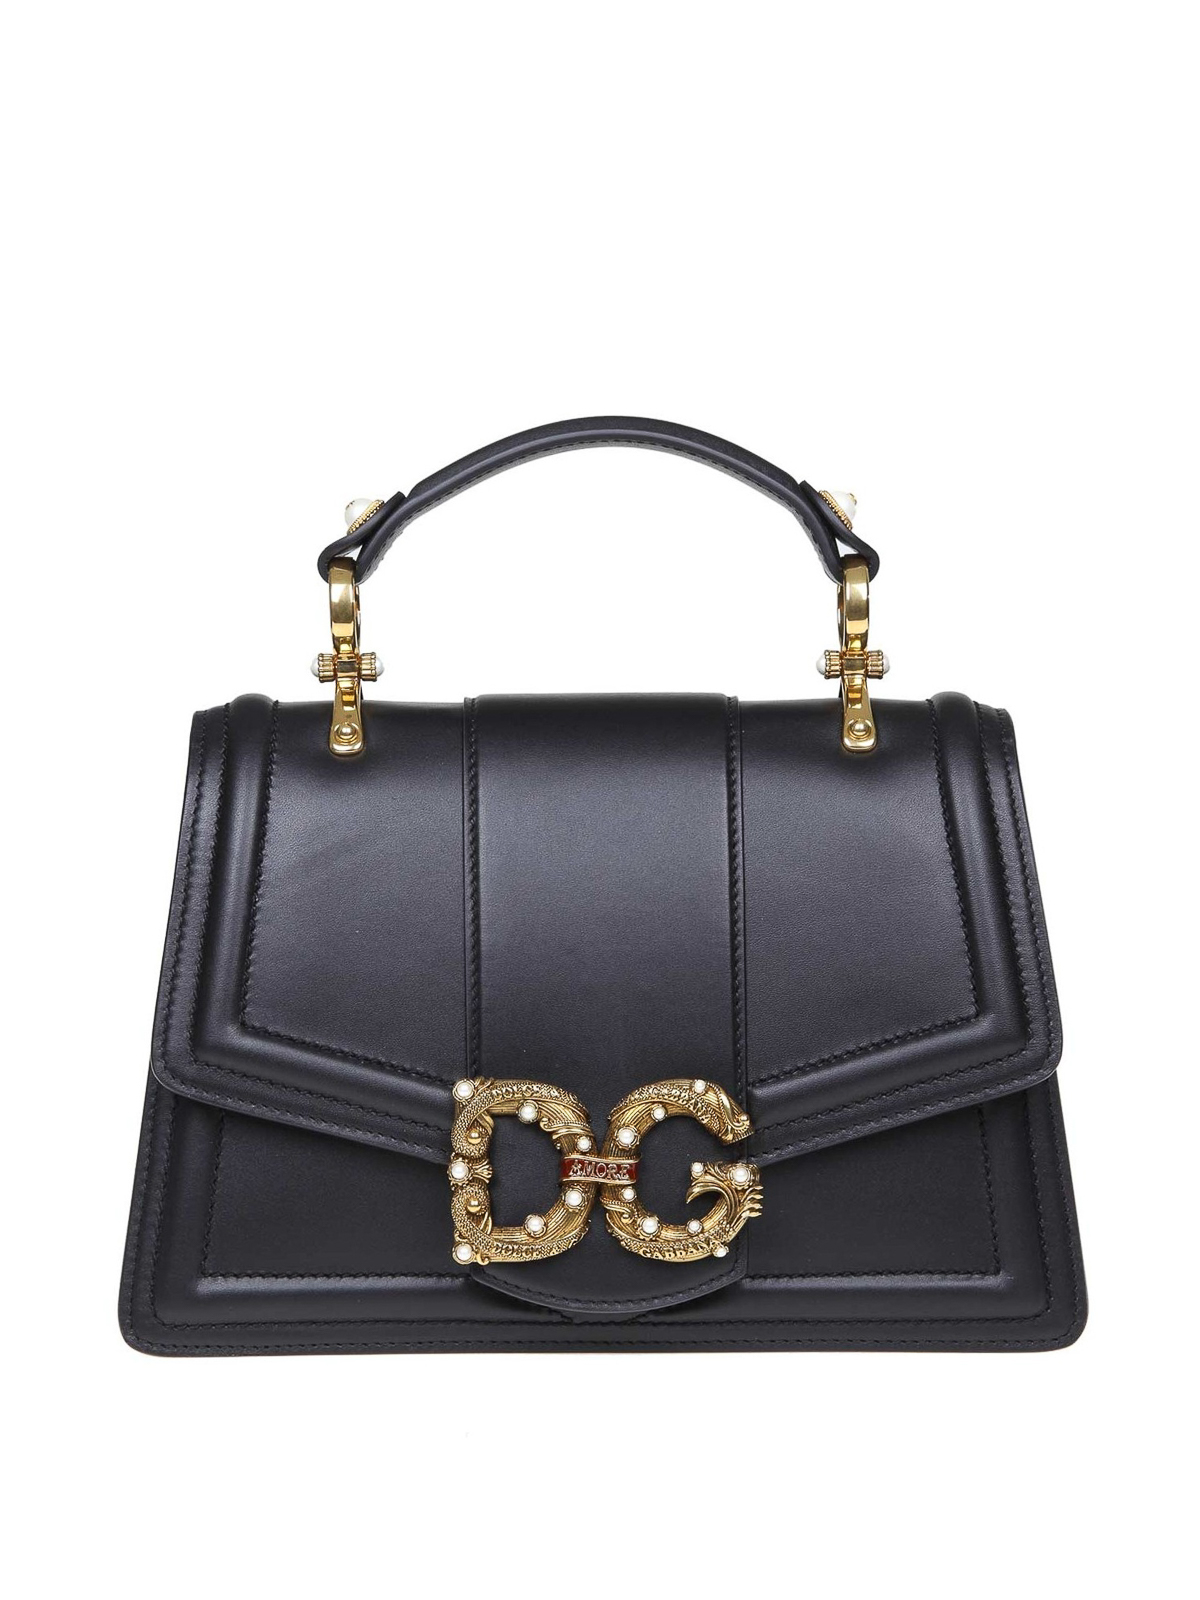 Gabbana - DG Amore black leather bag 